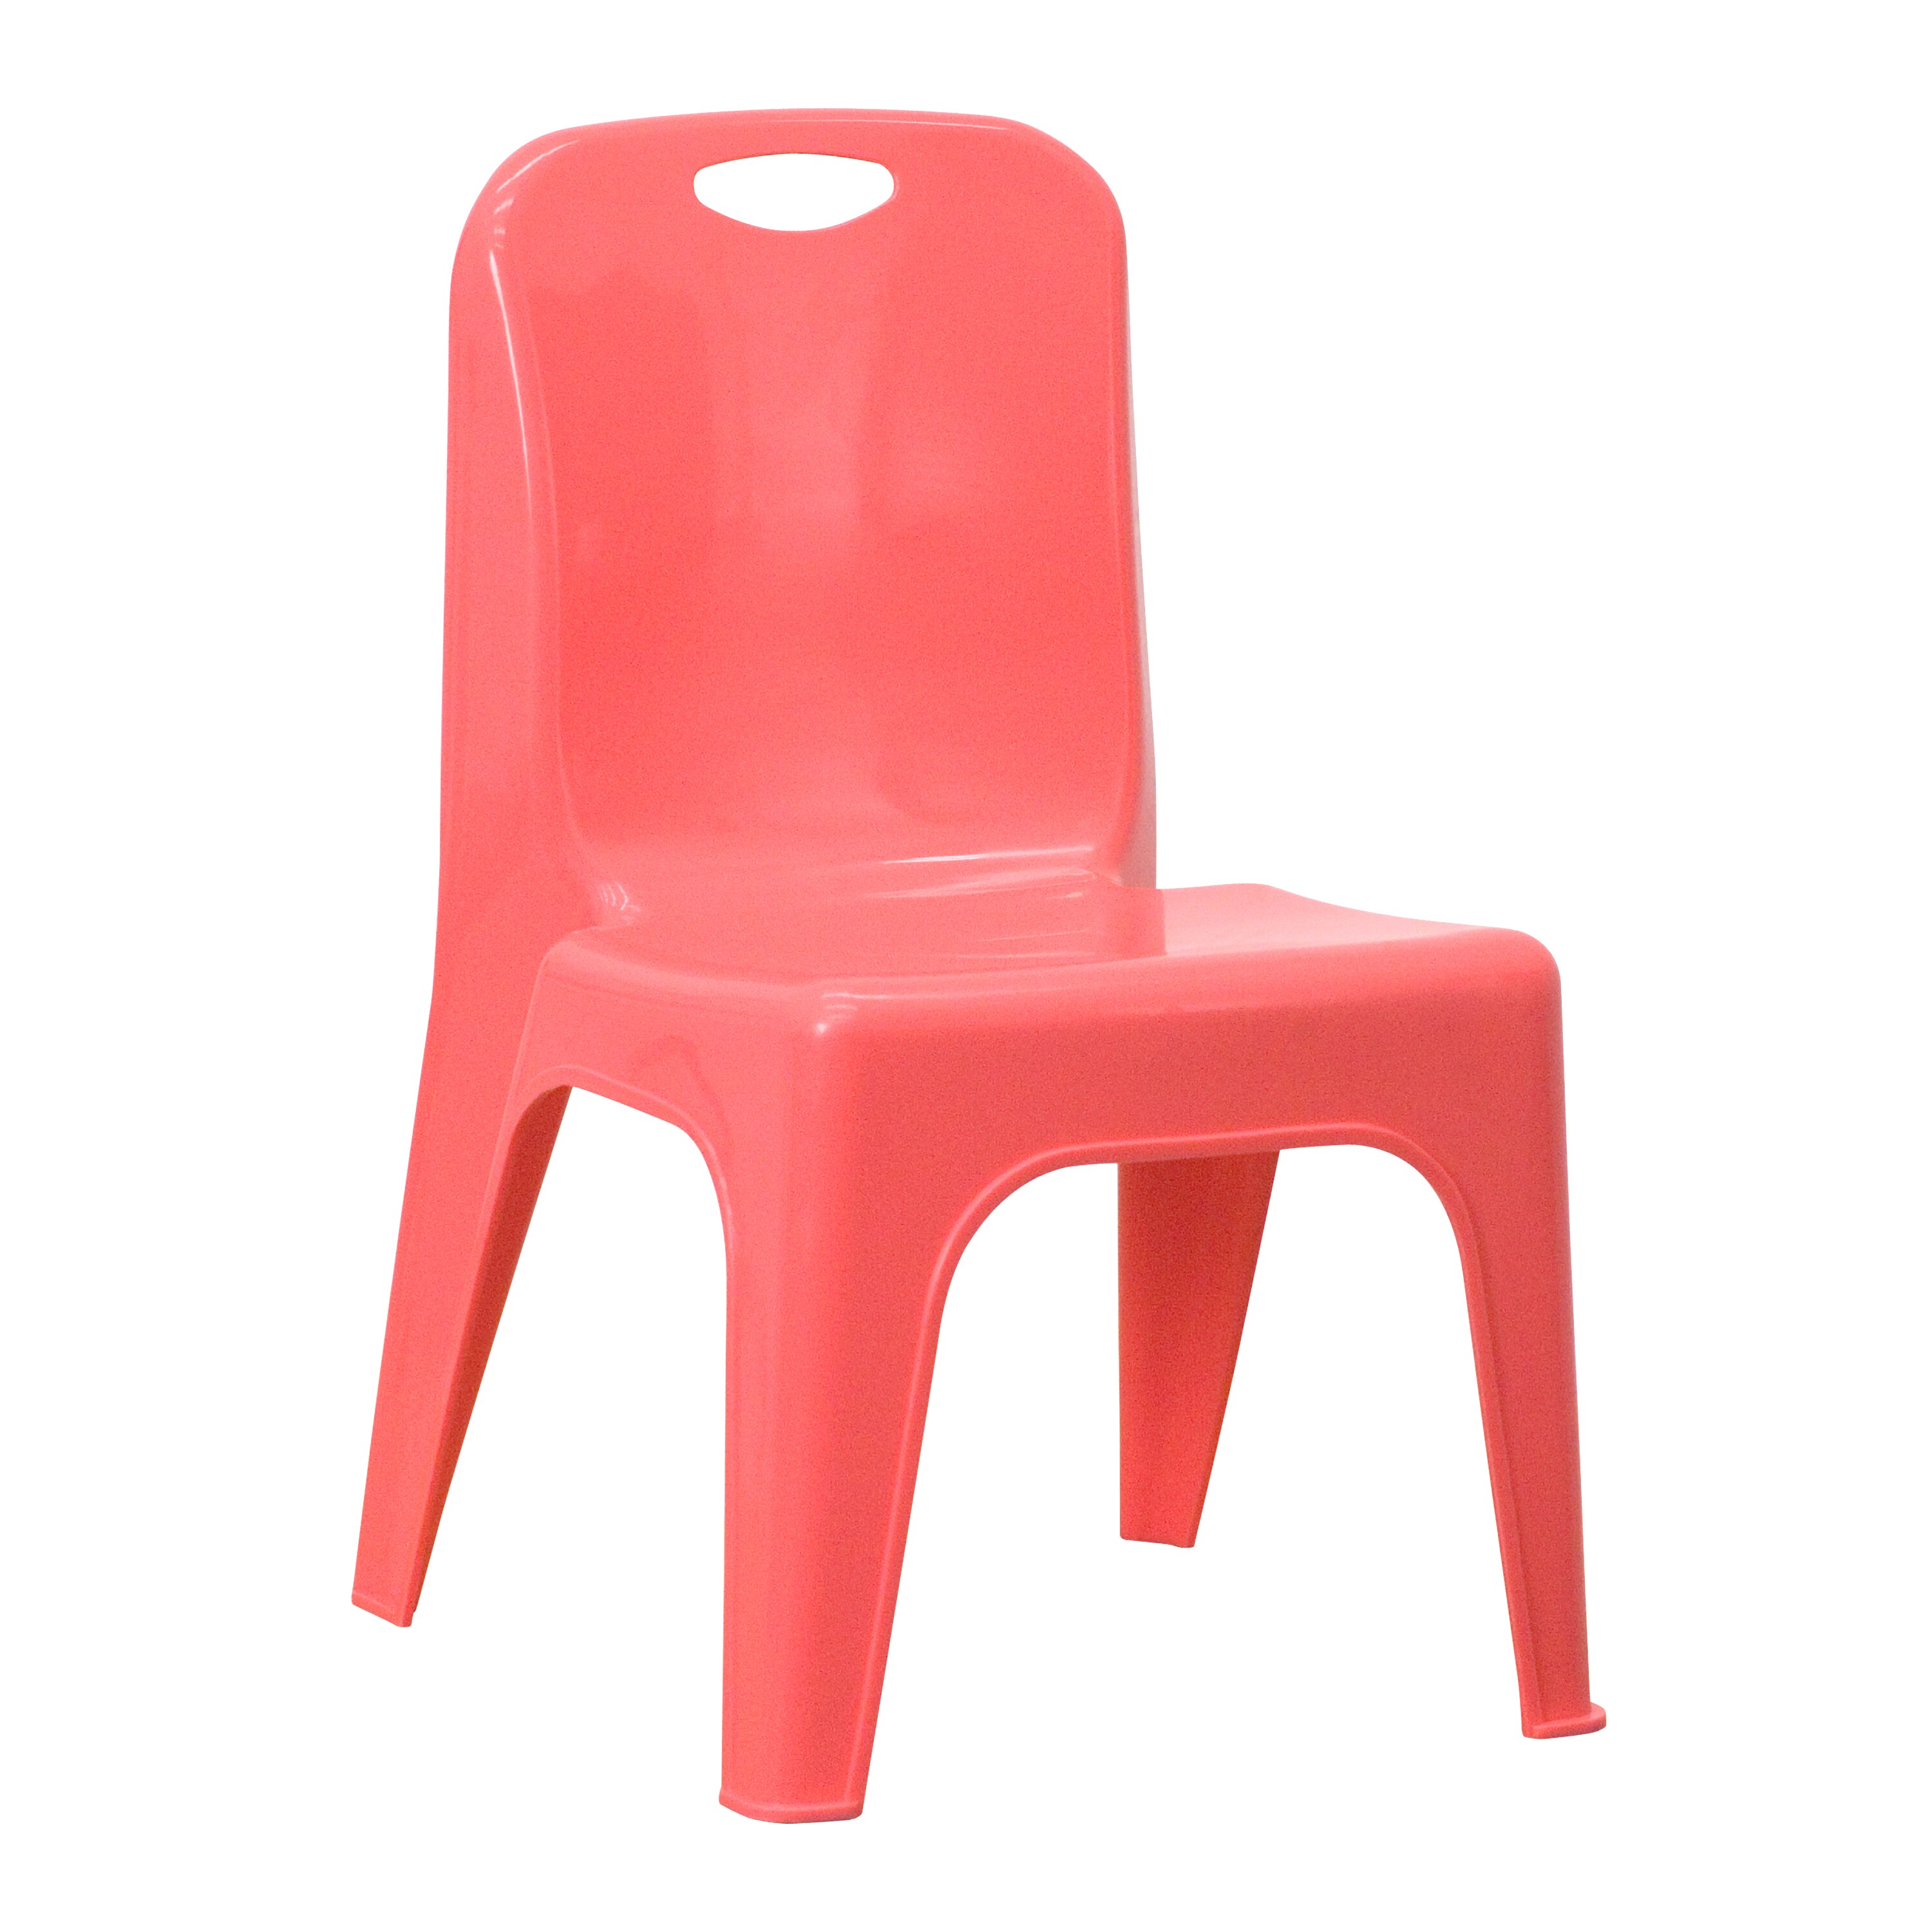 YU-YCX-003-RED-GG Renewed 10¬ Preschool/Kindergarten Red Plastic Stack Chair 